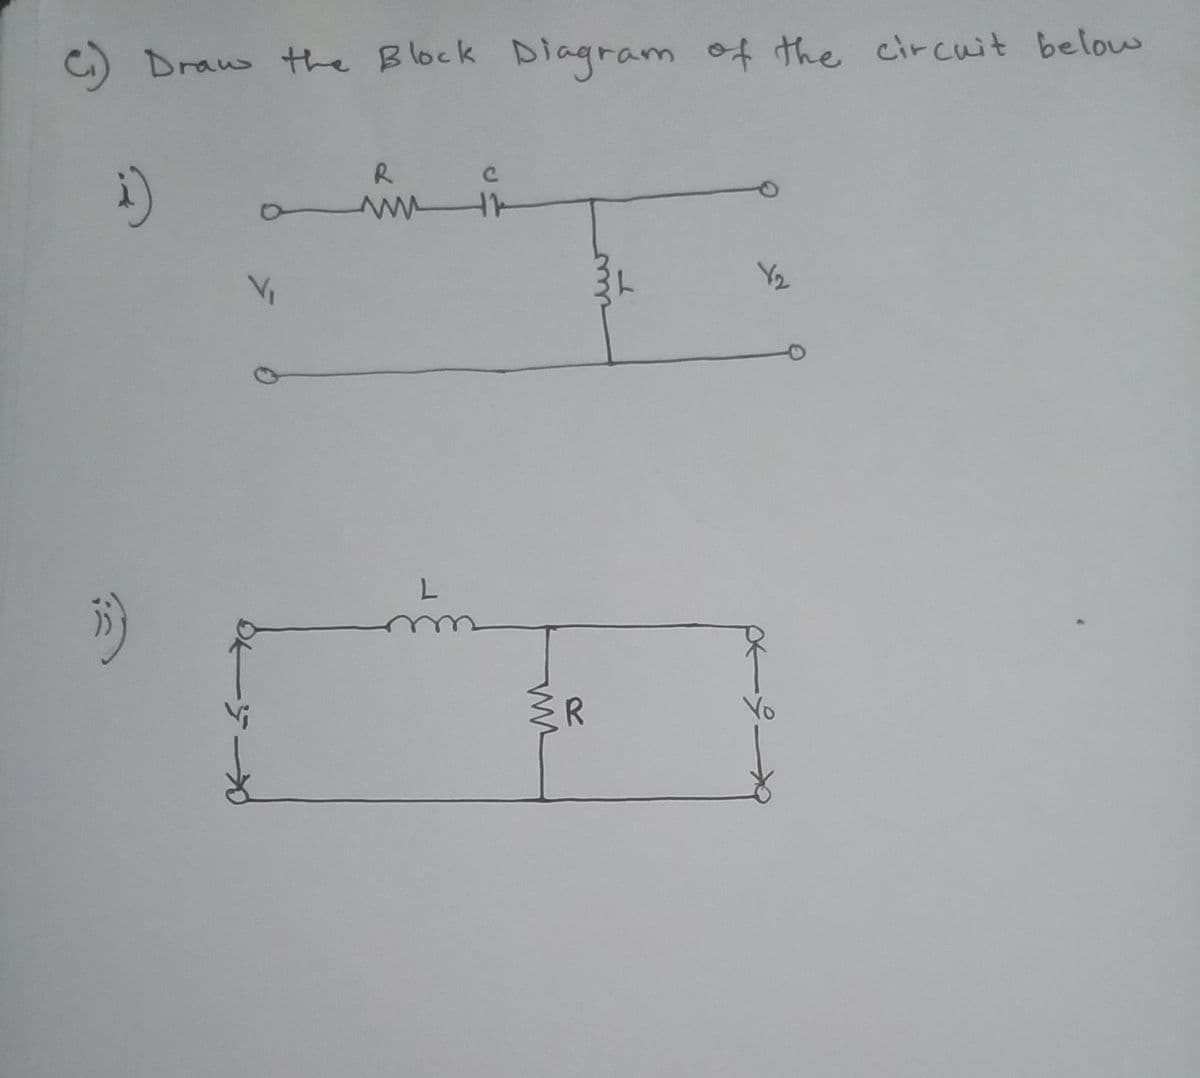 C) Draw the Block Diagram of the circuit below
i)
V₁
015-x
R
www
L
с
{R
+2
Yo